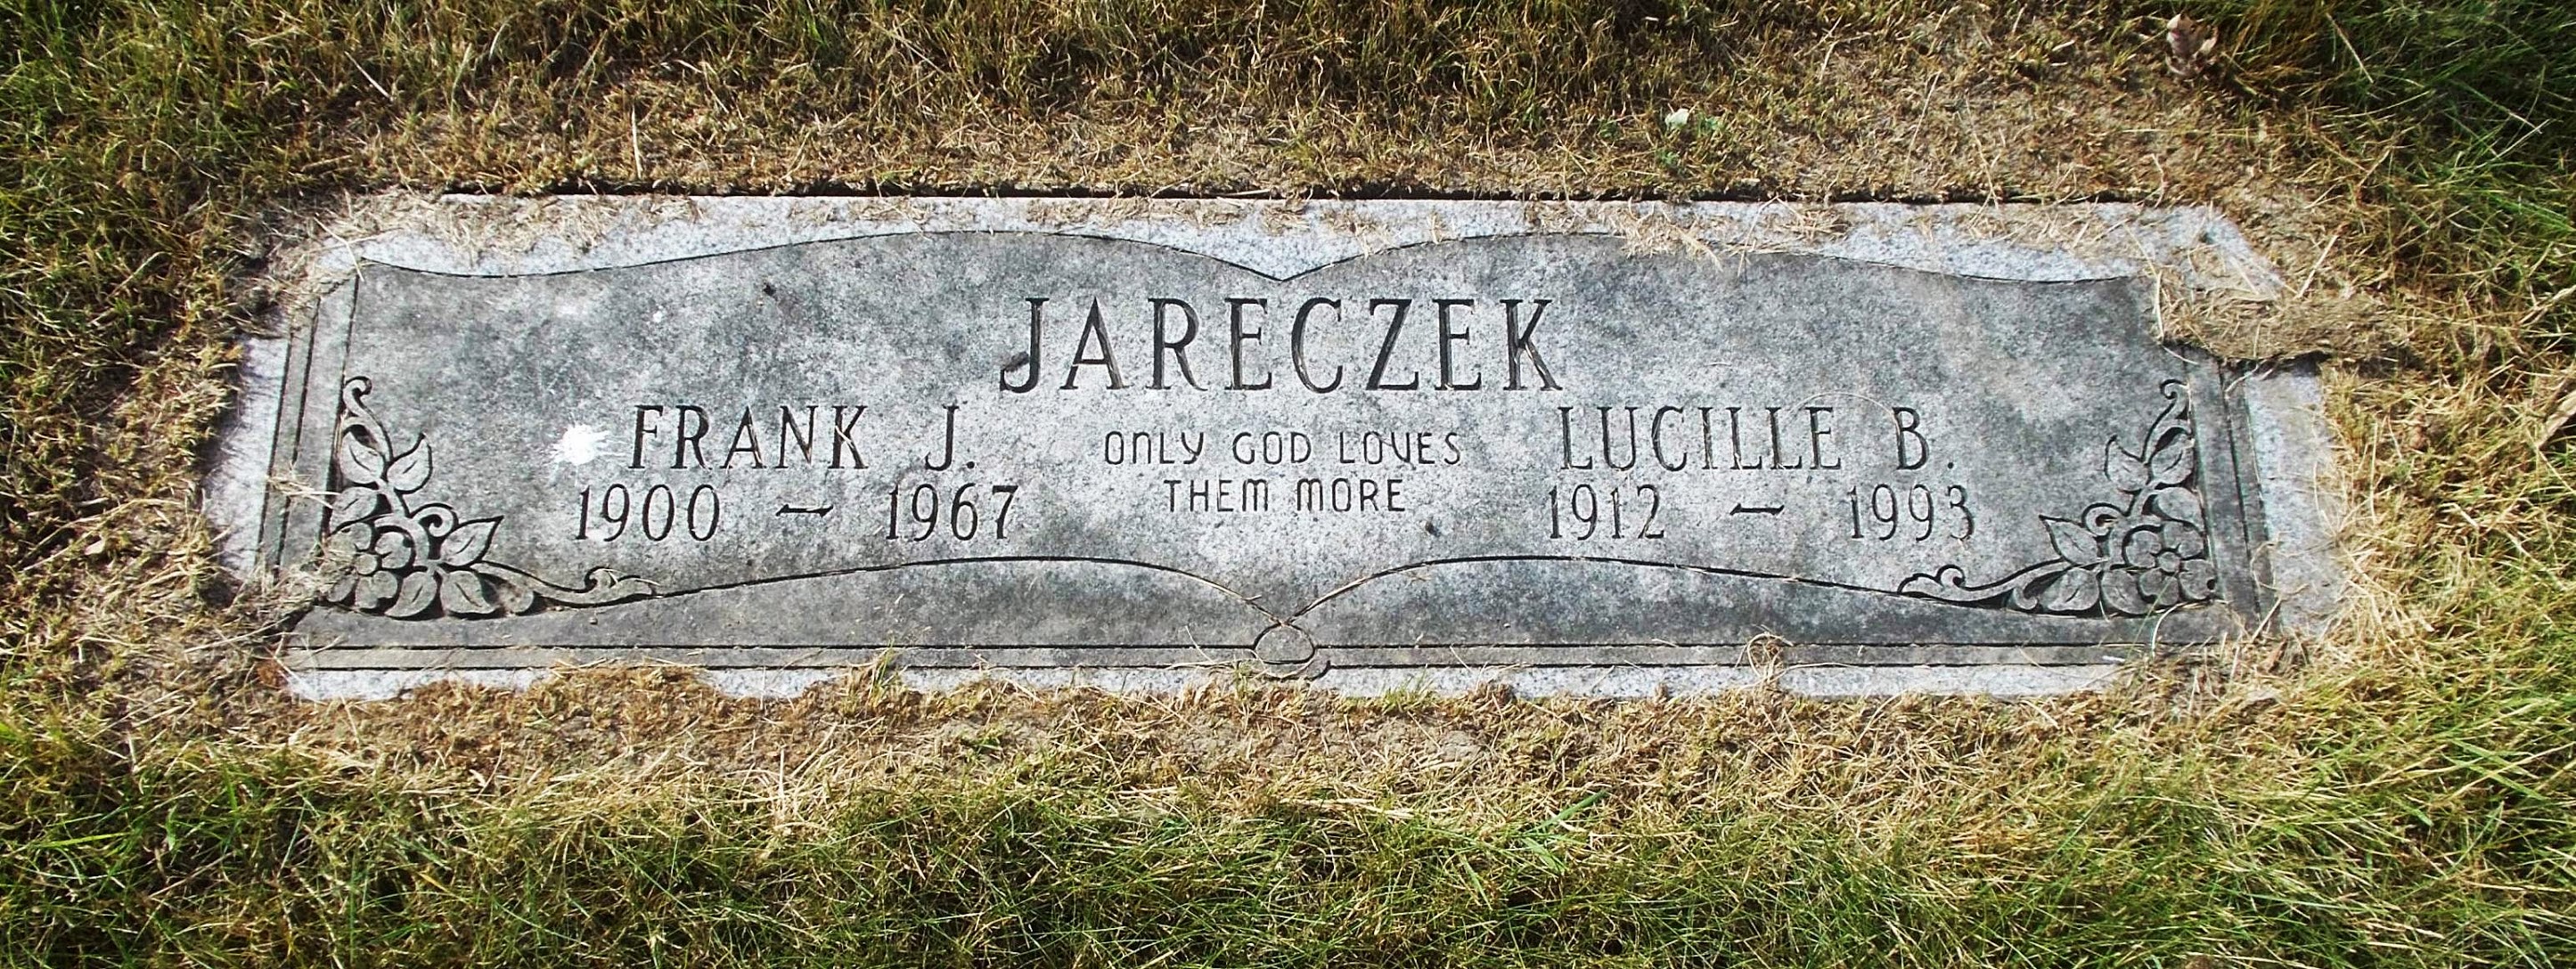 Frank J Jareczek